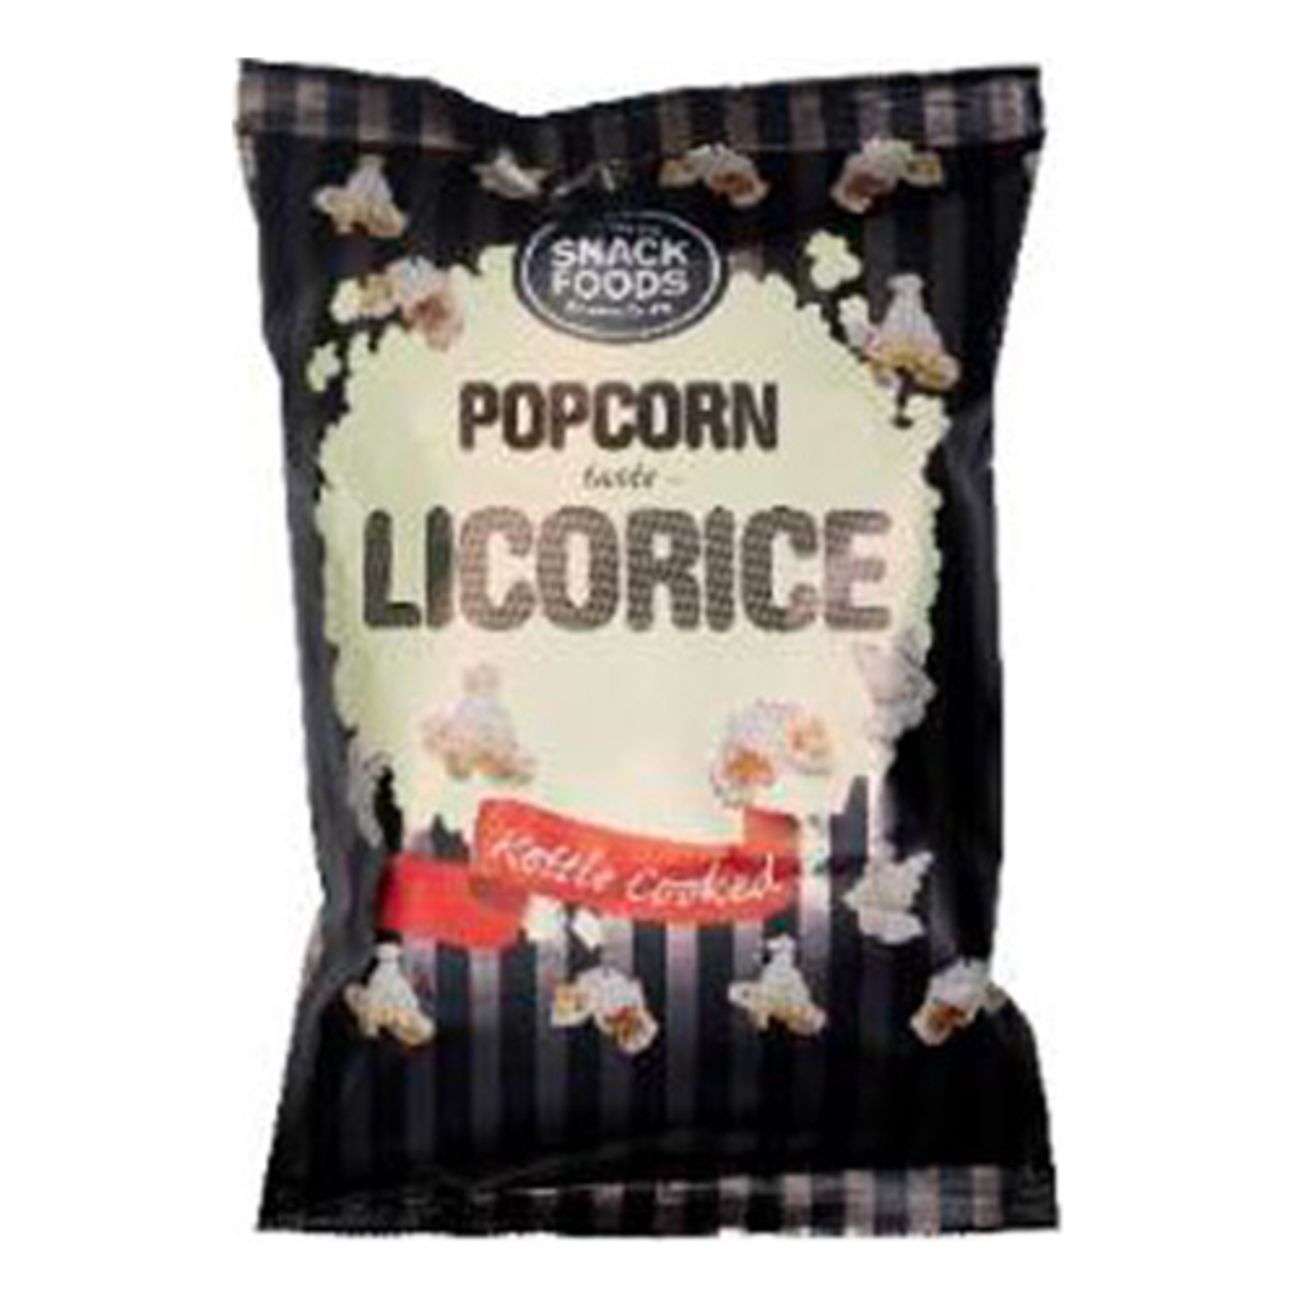 snacks-foods-popcorn-licorice-1